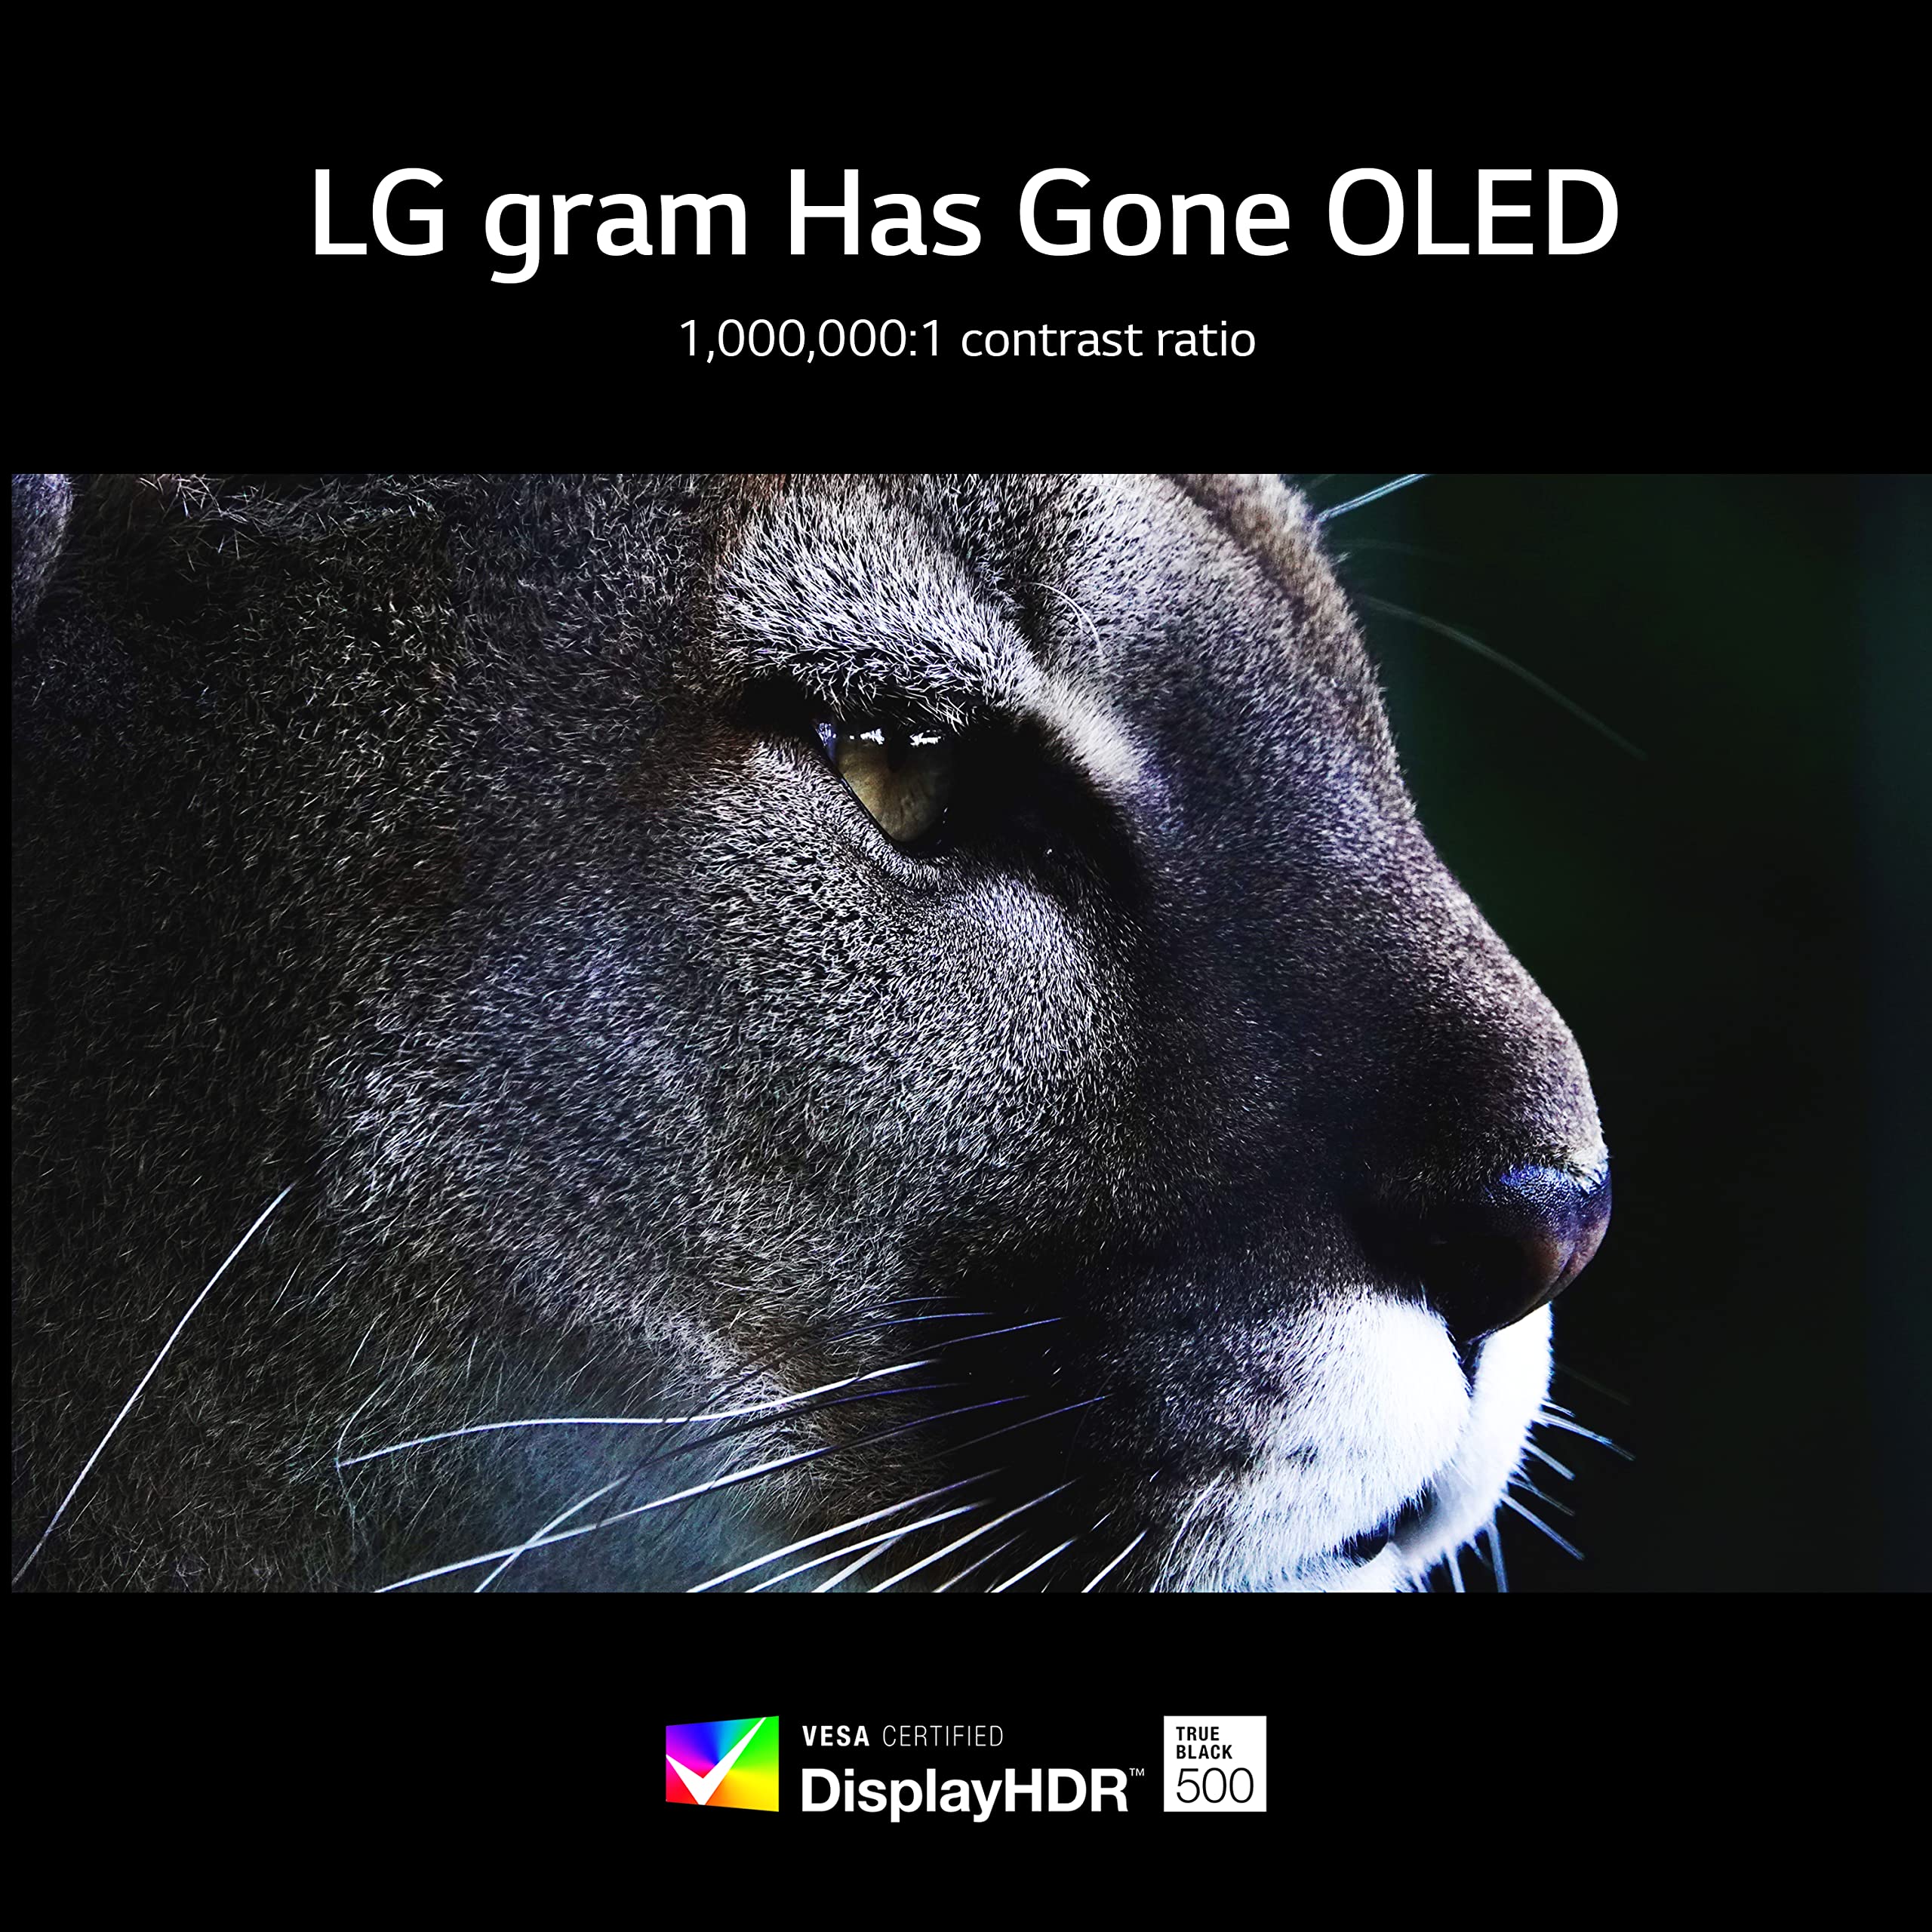 LG gram Style 14” OLED Laptop, Intel 13th Gen Core i7 Evo Platform, Windows 11 Home, 32GB RAM, 1TB SSD, Dynamic White